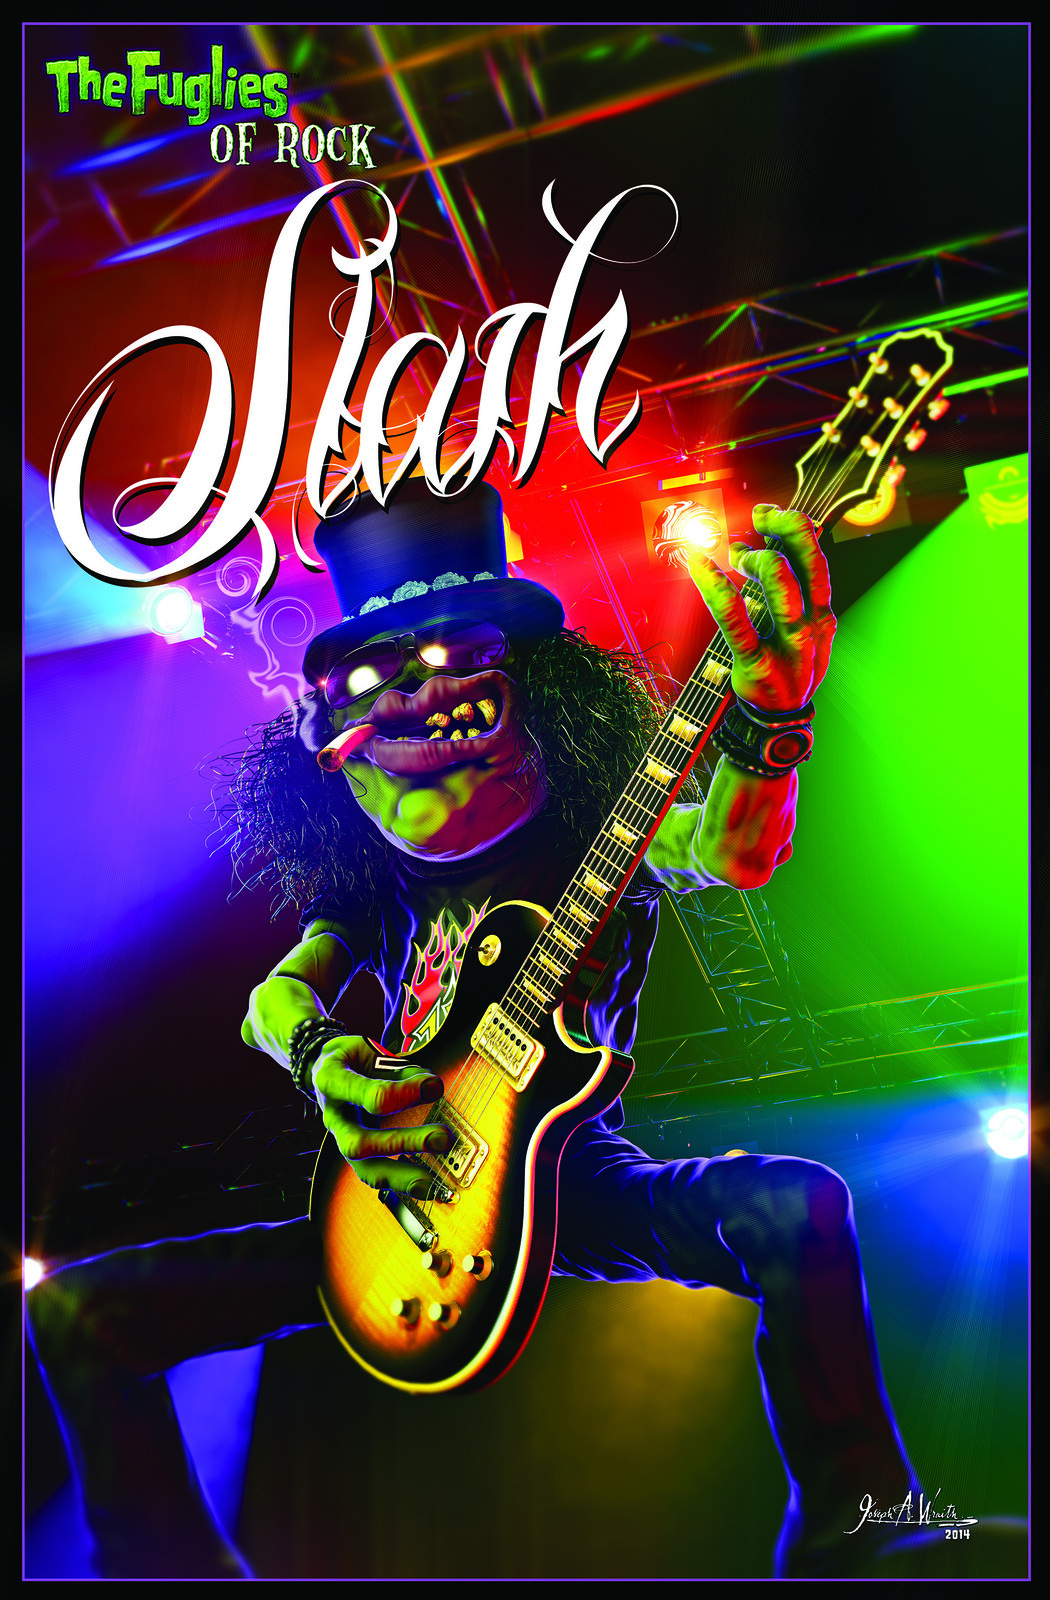 The Fuglies presents The Fuglies of Rock: Slash
©2019 Copyright, Joseph A. Wraith